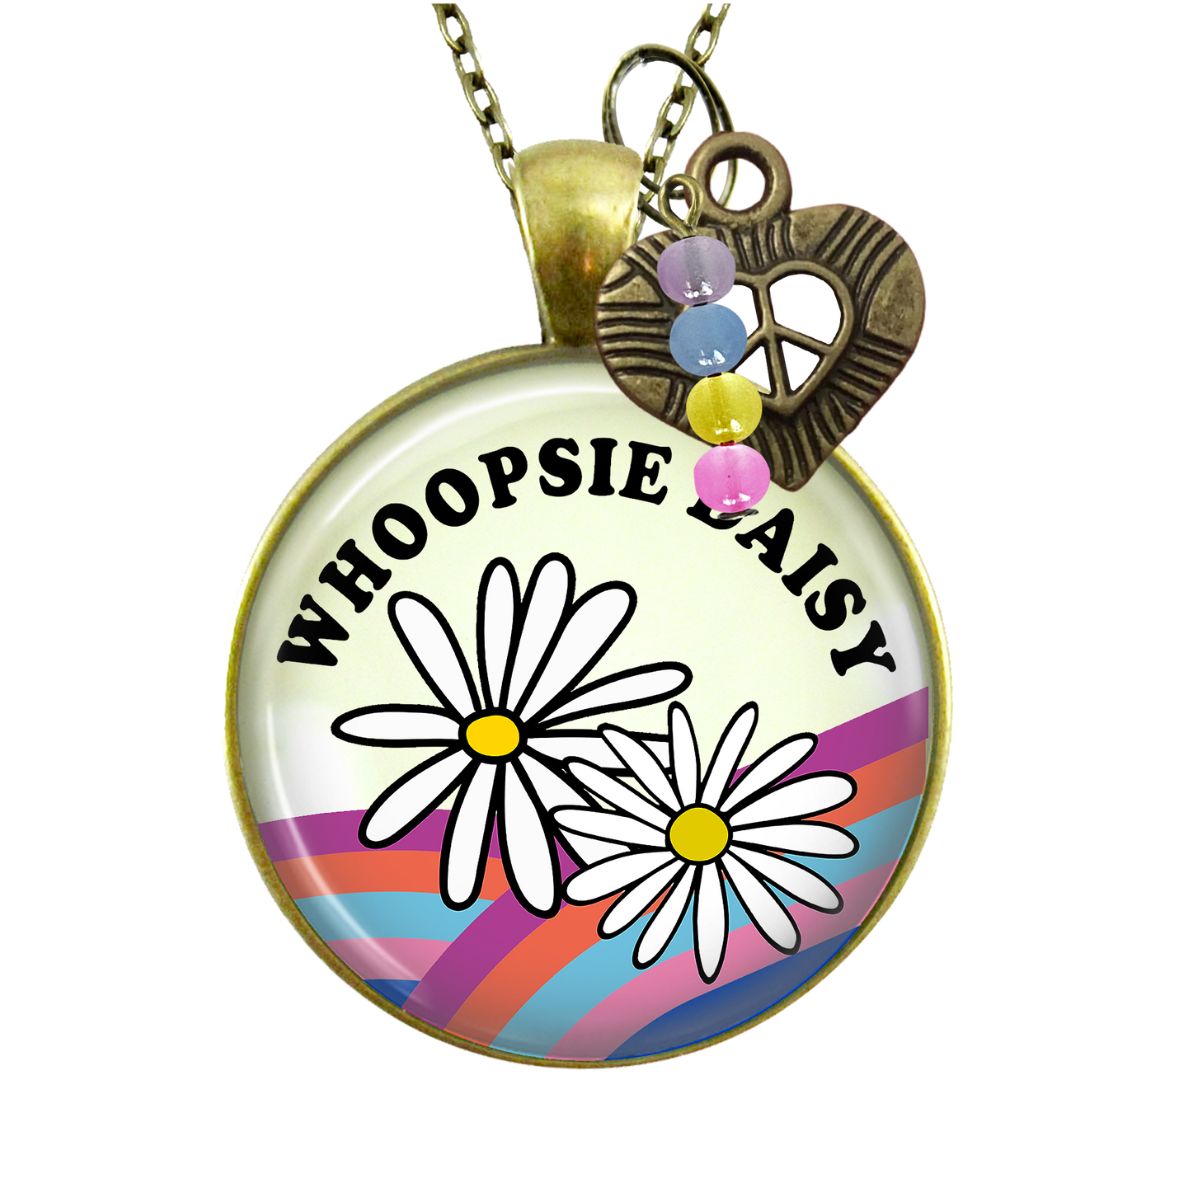 Handmade Gutsy Goodness Jewelry Whoopsie Daisy Boho Hippie Style Necklace Rainbow Pendant Jewelry Heart Peace Symbol Charm & Card